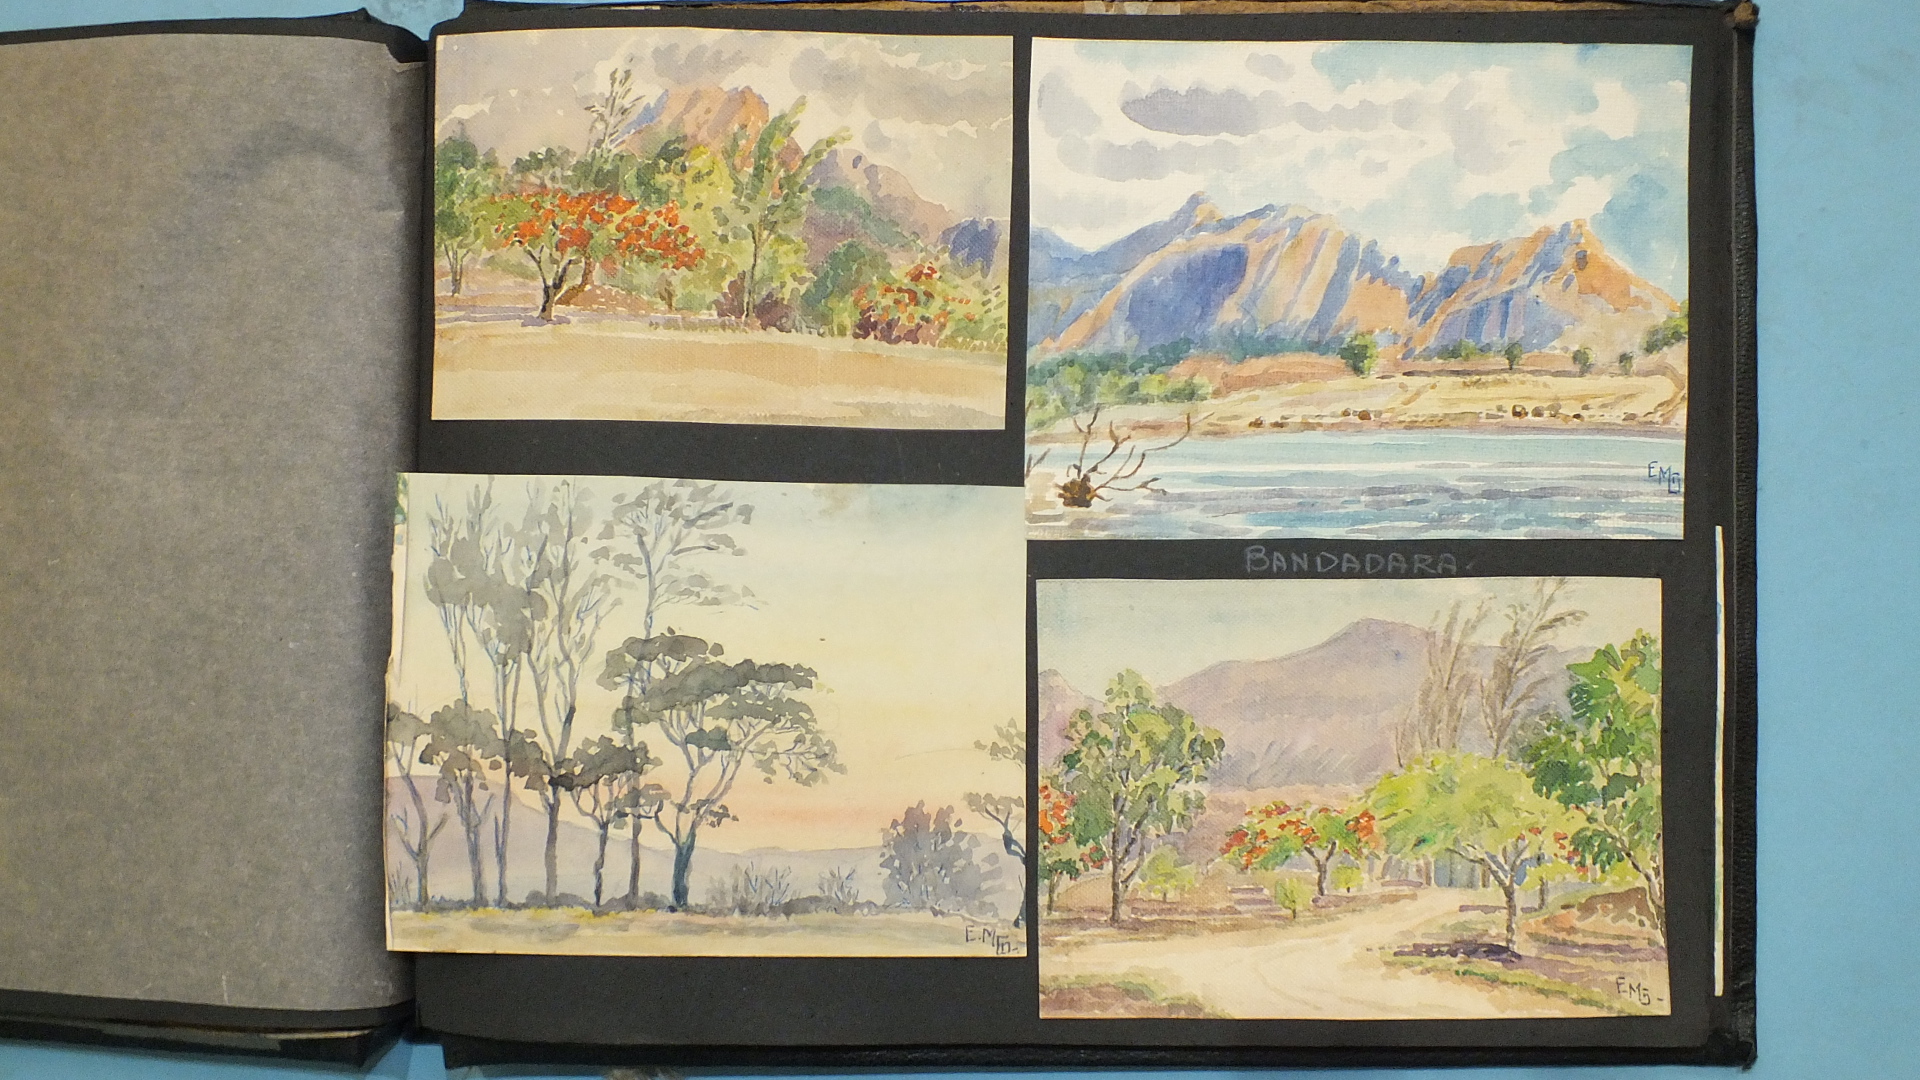 E M Gregson, a book of watercolour sketches of Indian landscapes, including Bandadara, Srinagar, - Image 3 of 5